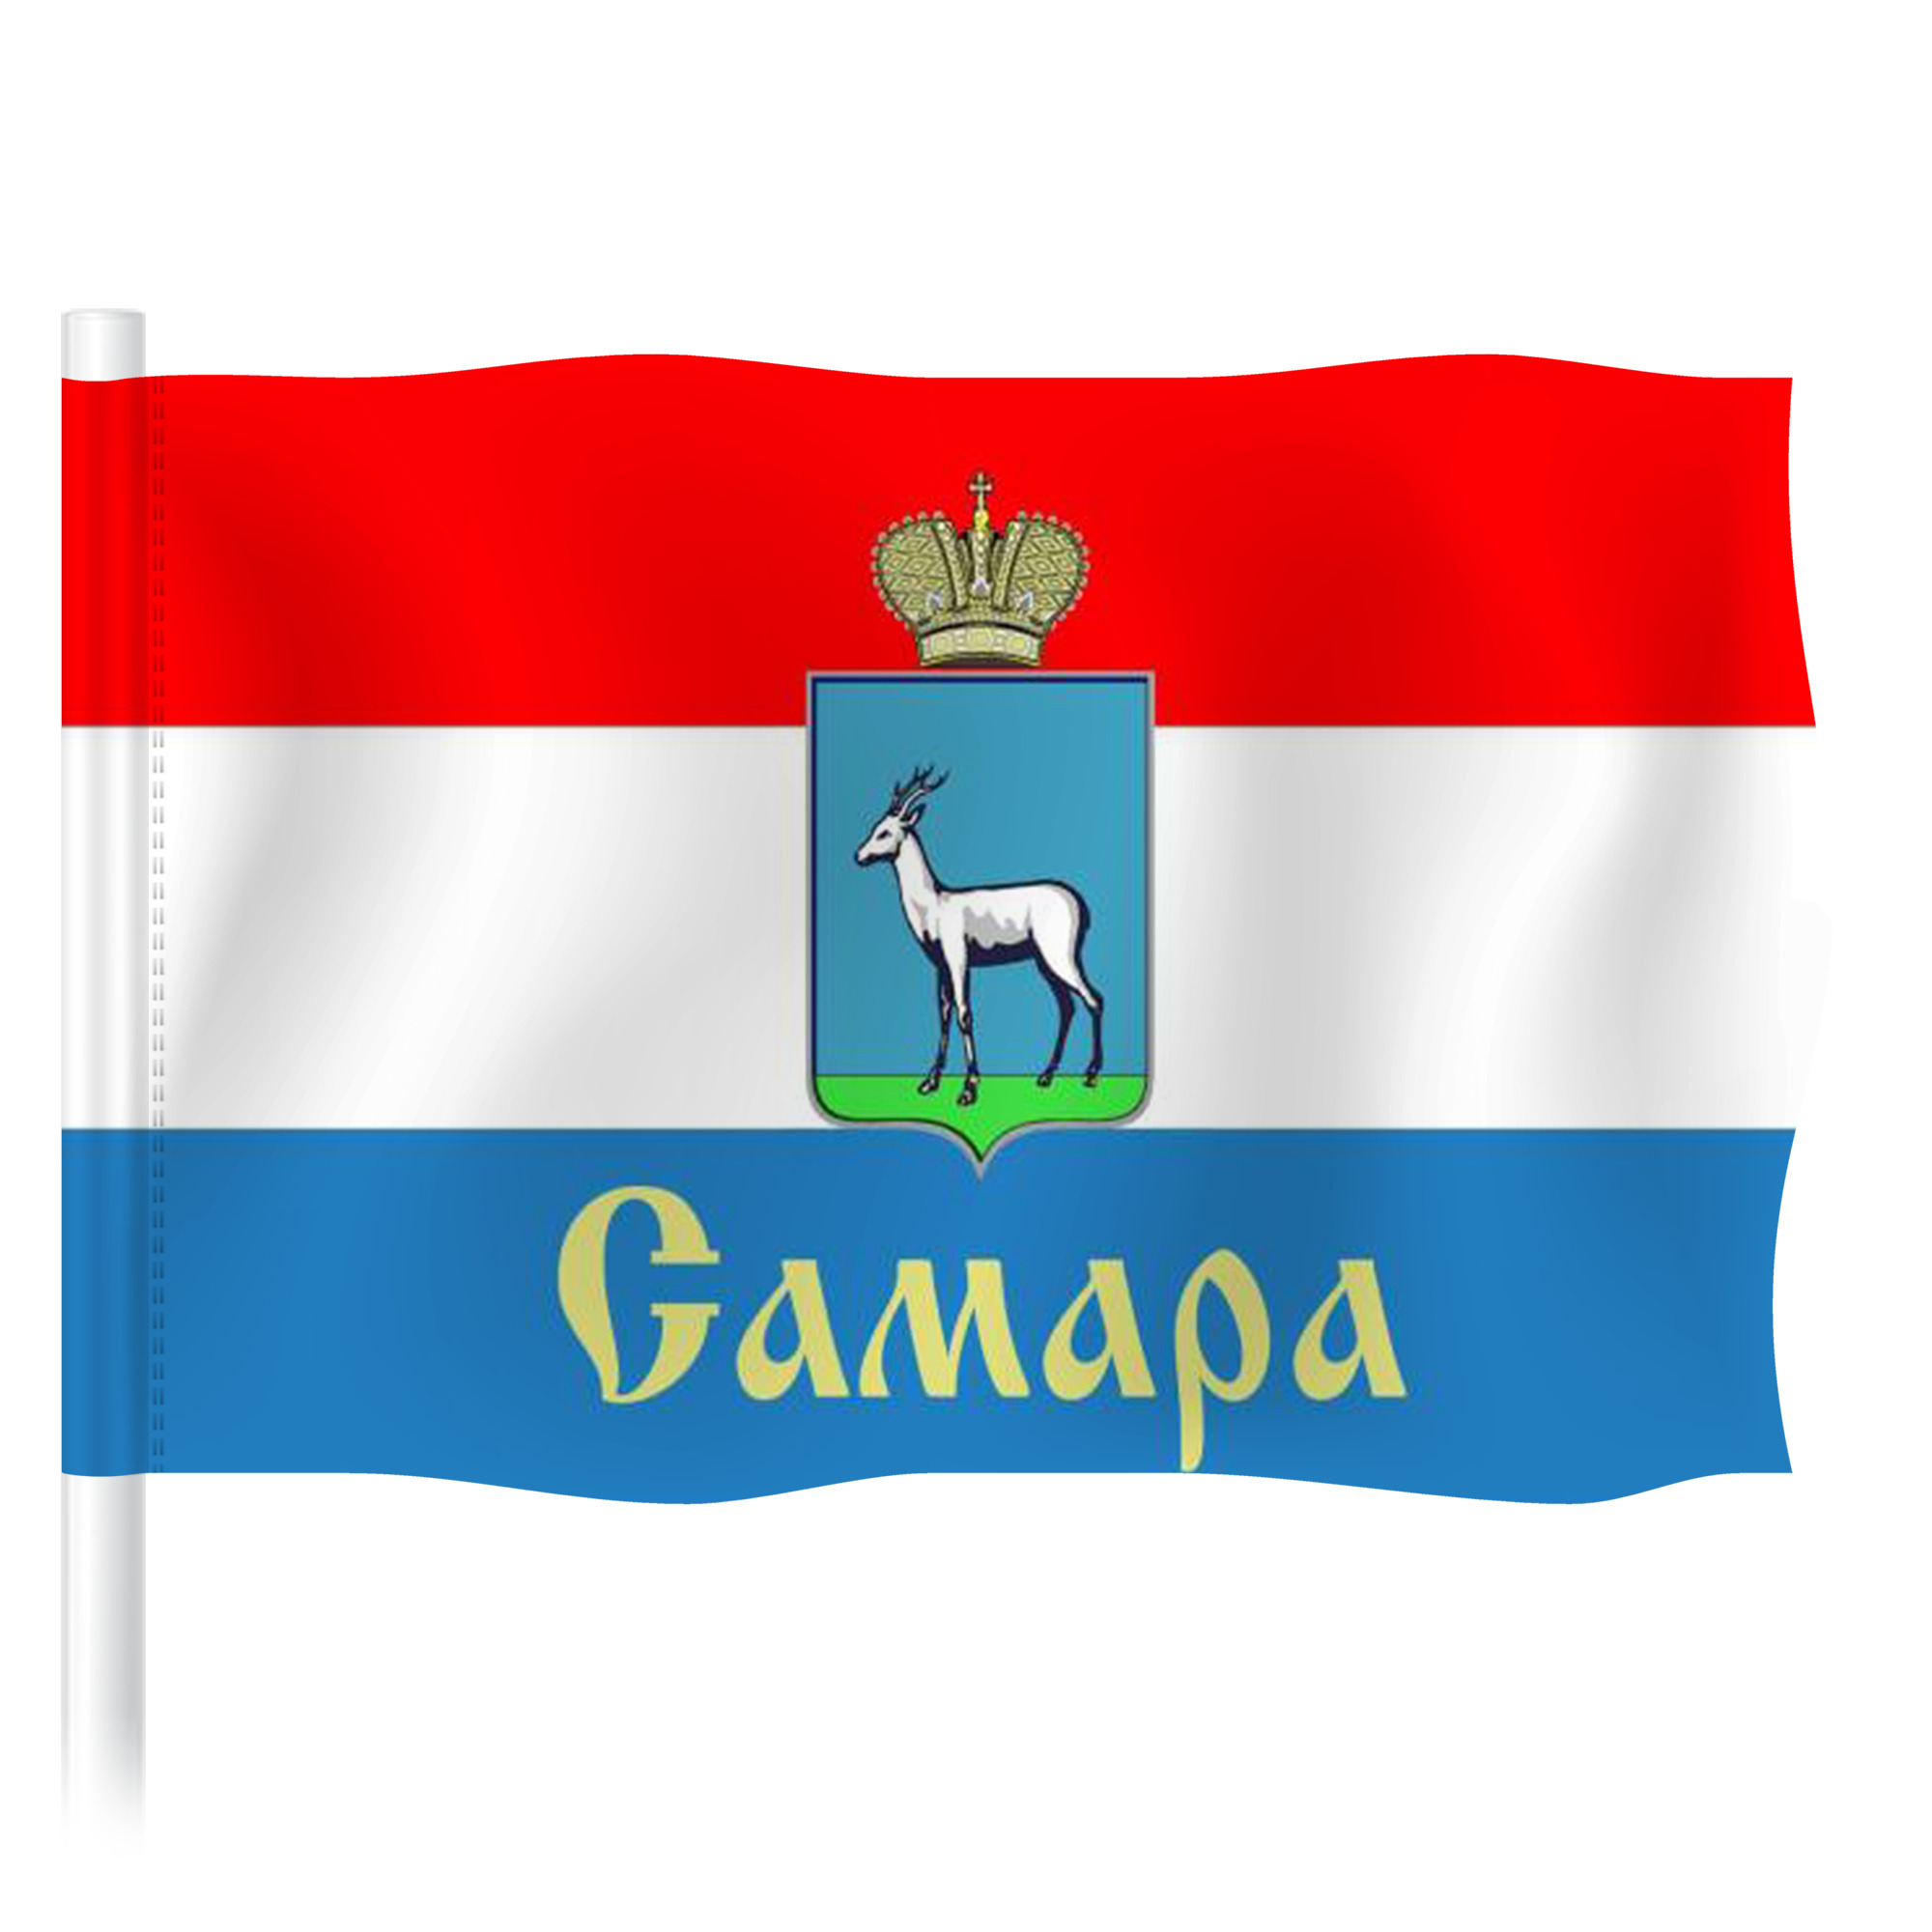 Флаг самарской области фото